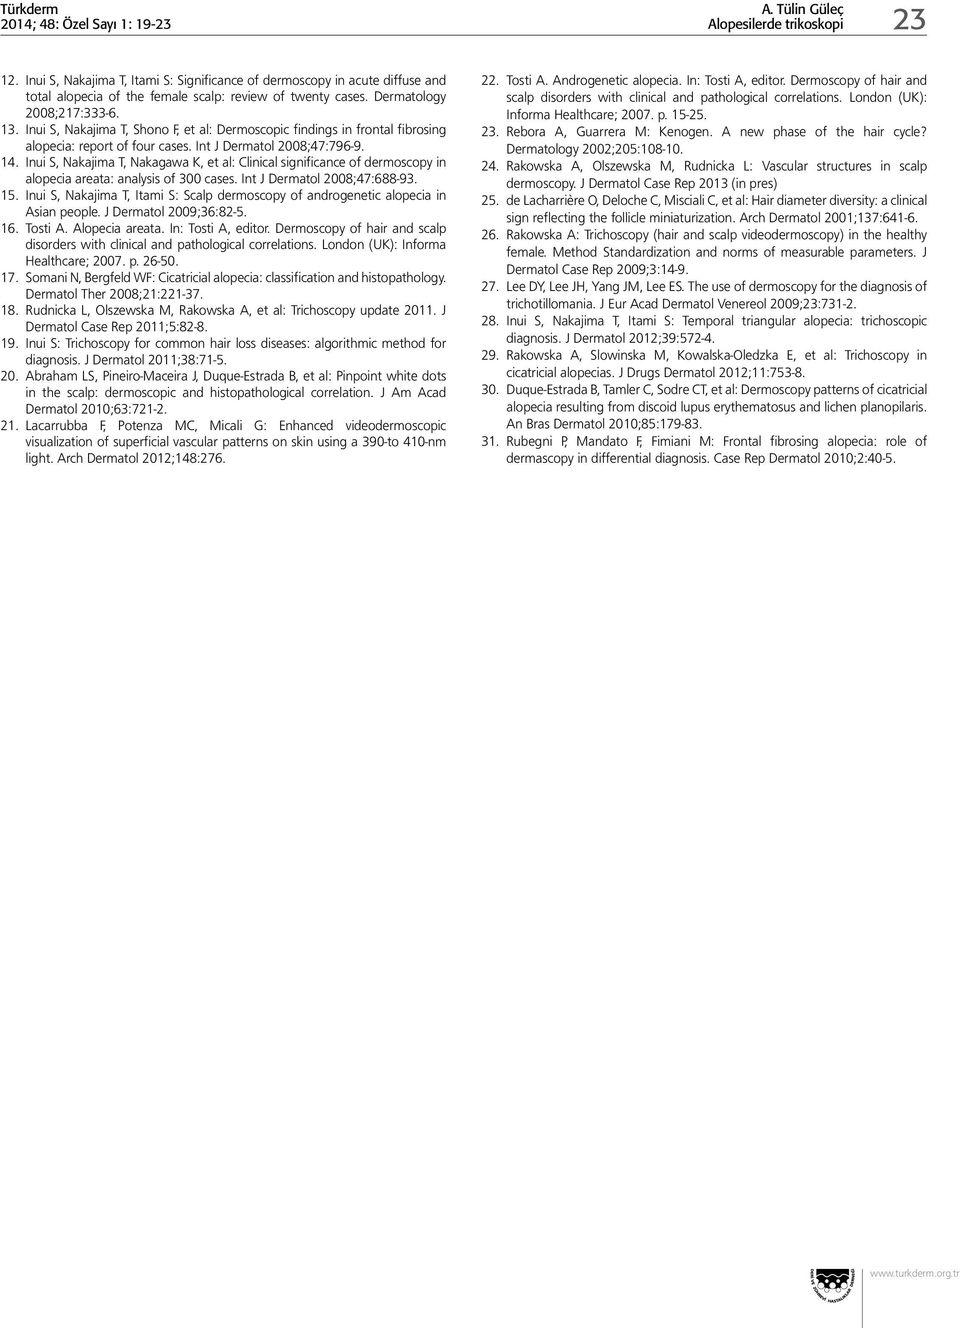 Inui S, Nakajima T, Nakagawa K, et al: Clinical significance of dermoscopy in alopecia areata: analysis of 300 cases. Int J Dermatol 2008;47:688-93. 15.